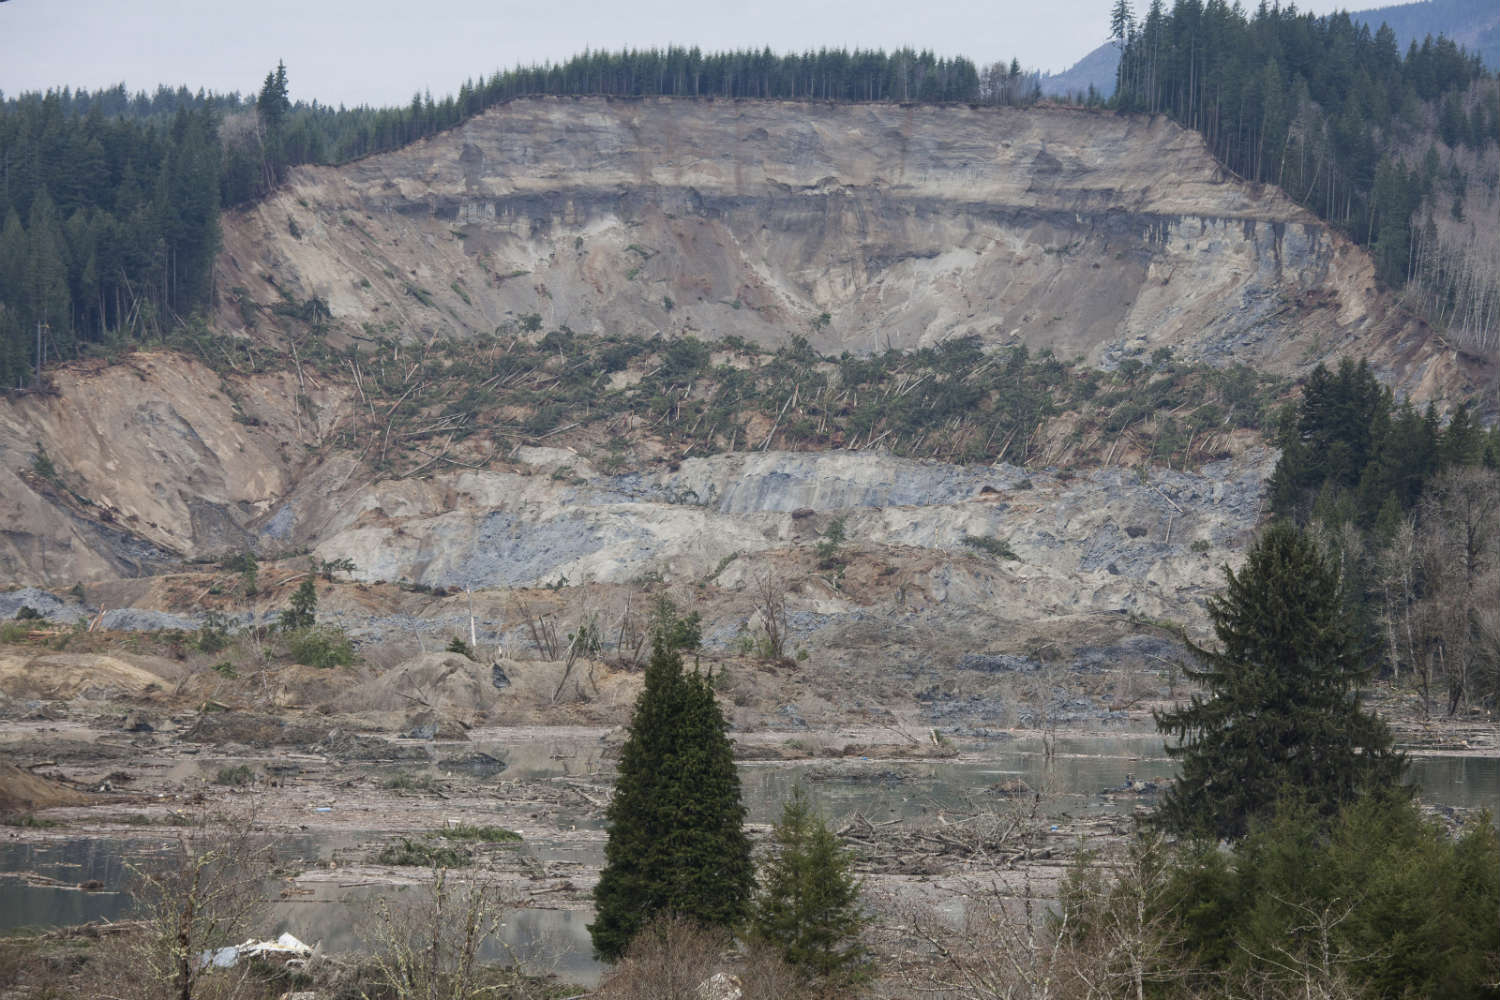 A massive landslide killed dozens in Washington